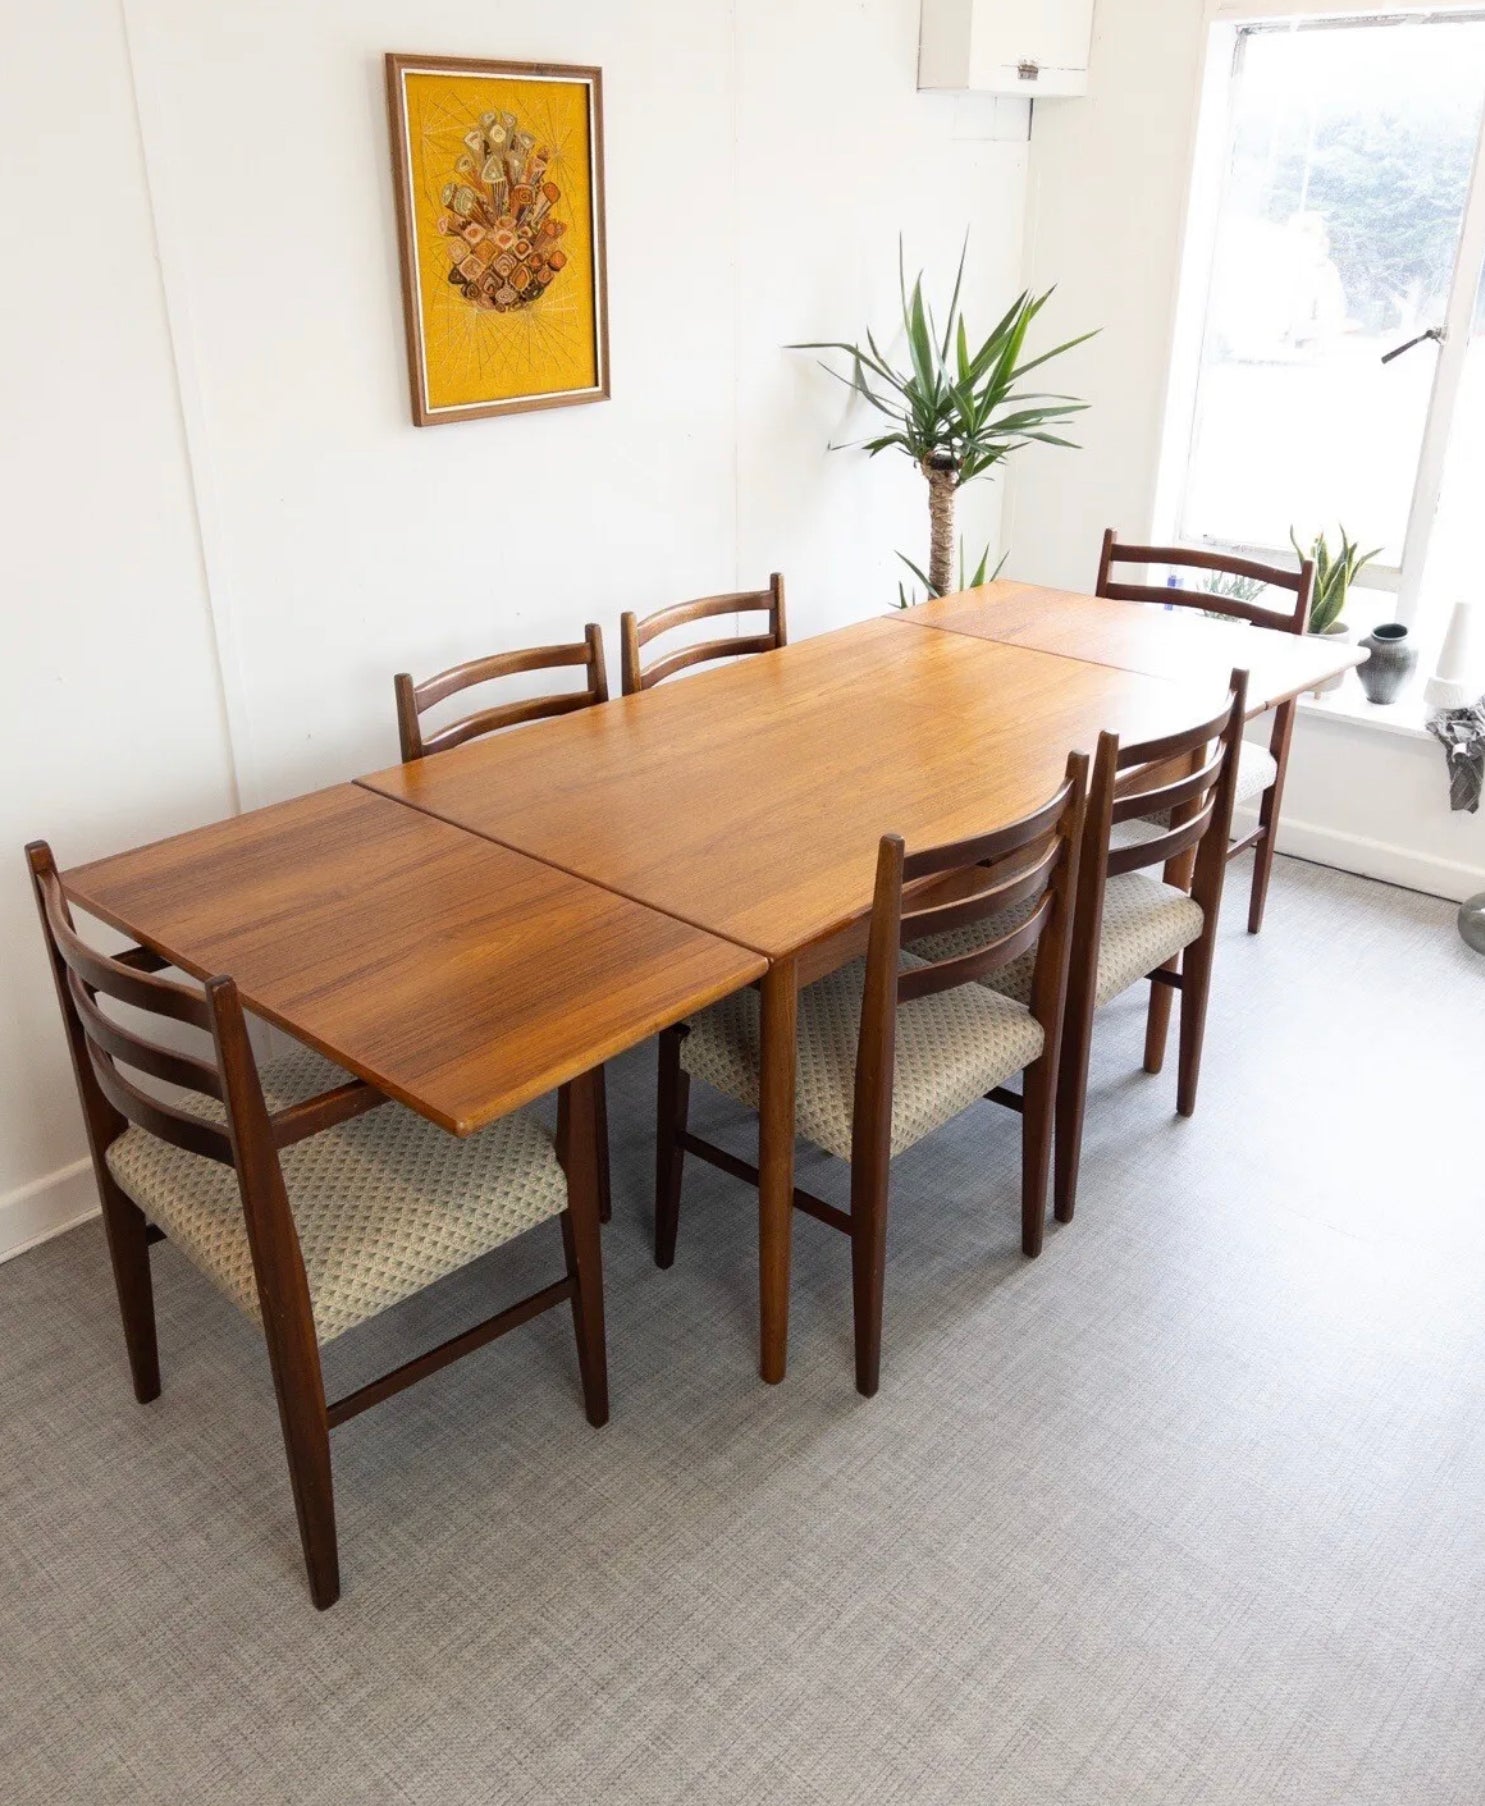 Danish Teak Mid Century Dining Table from A M Mobler in Denmark - teakyfinders